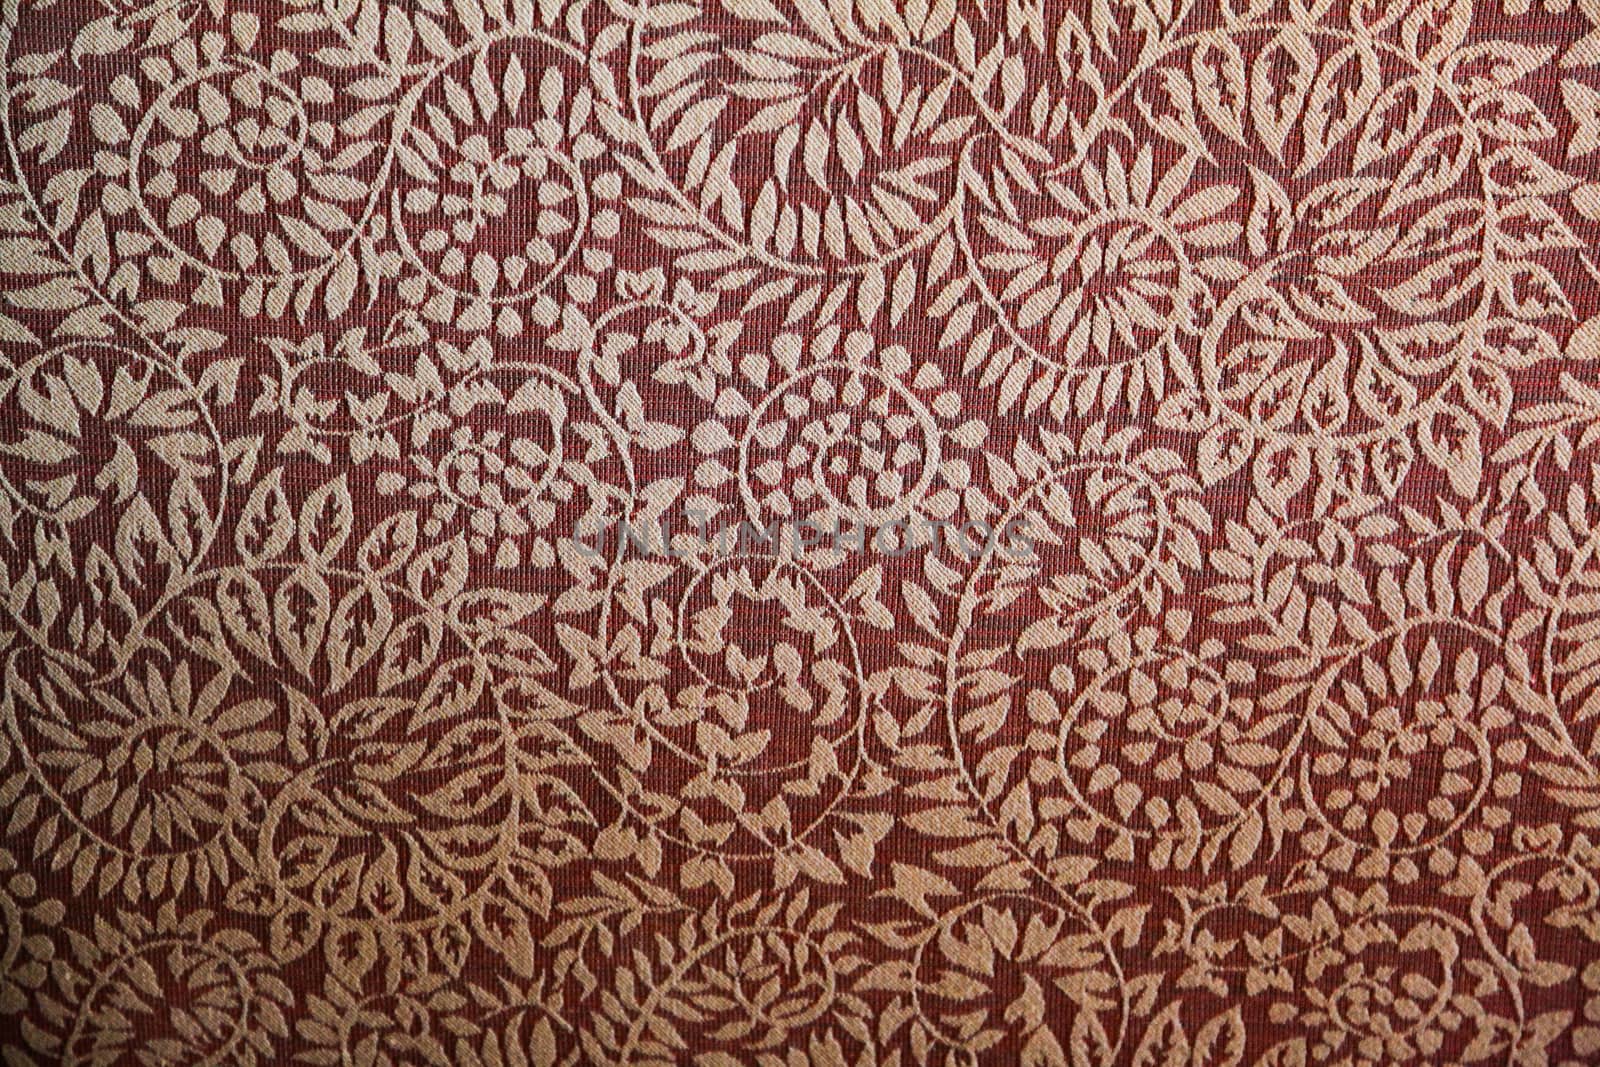 Fabric Pattern by quackersnaps